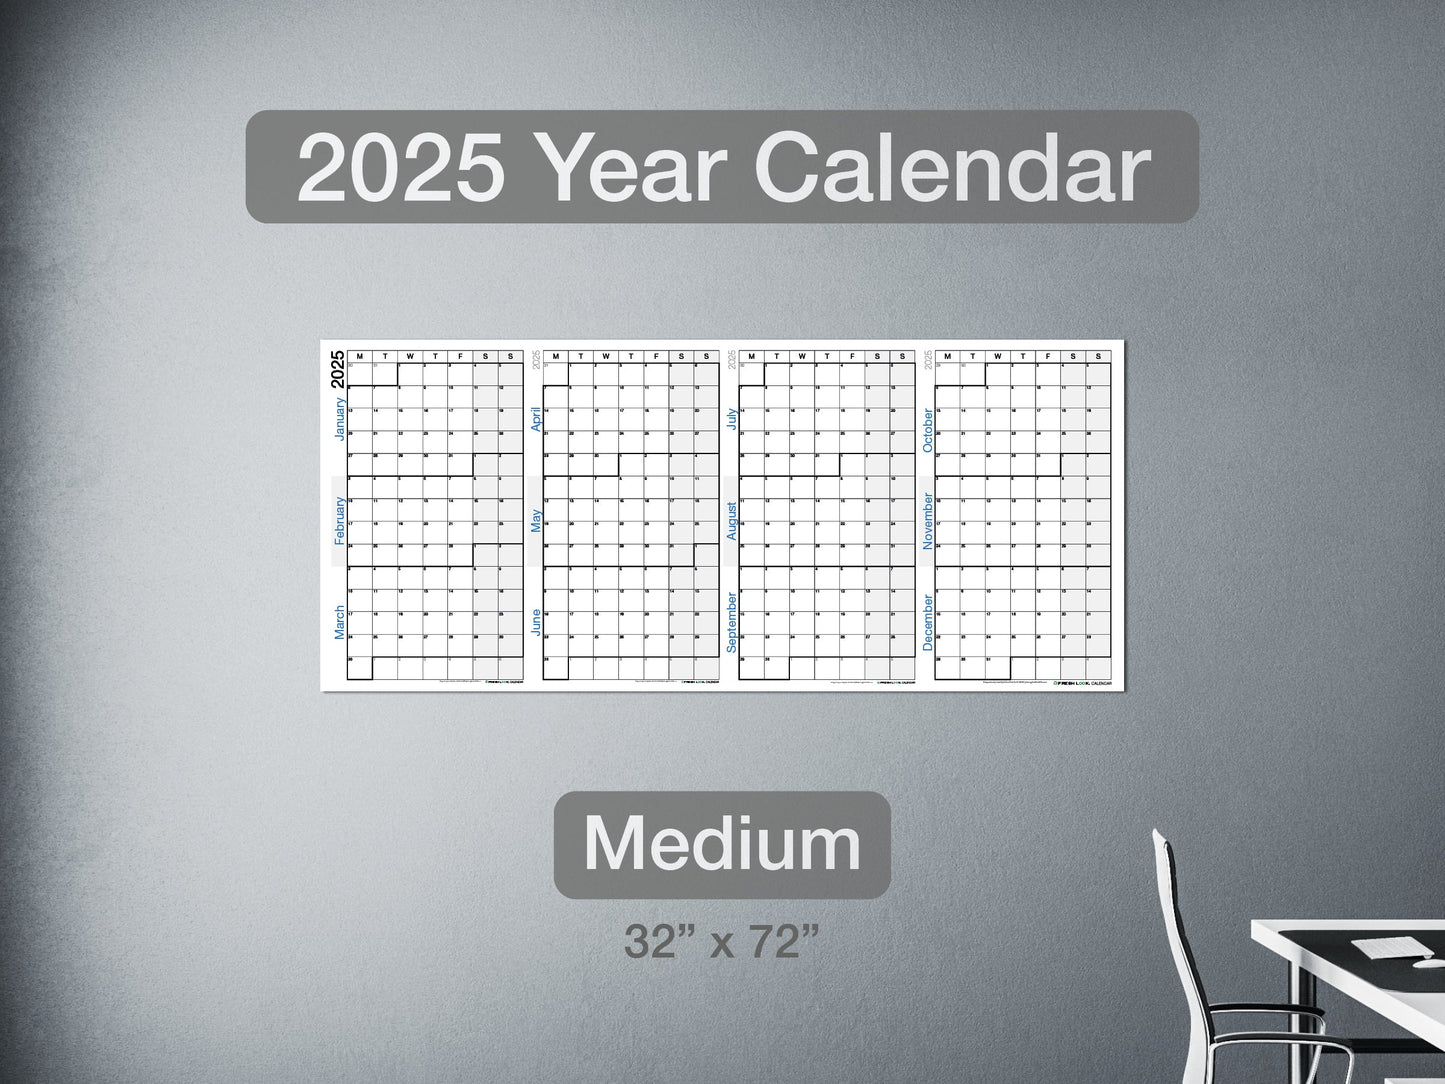 2025 Year Calendar Medium